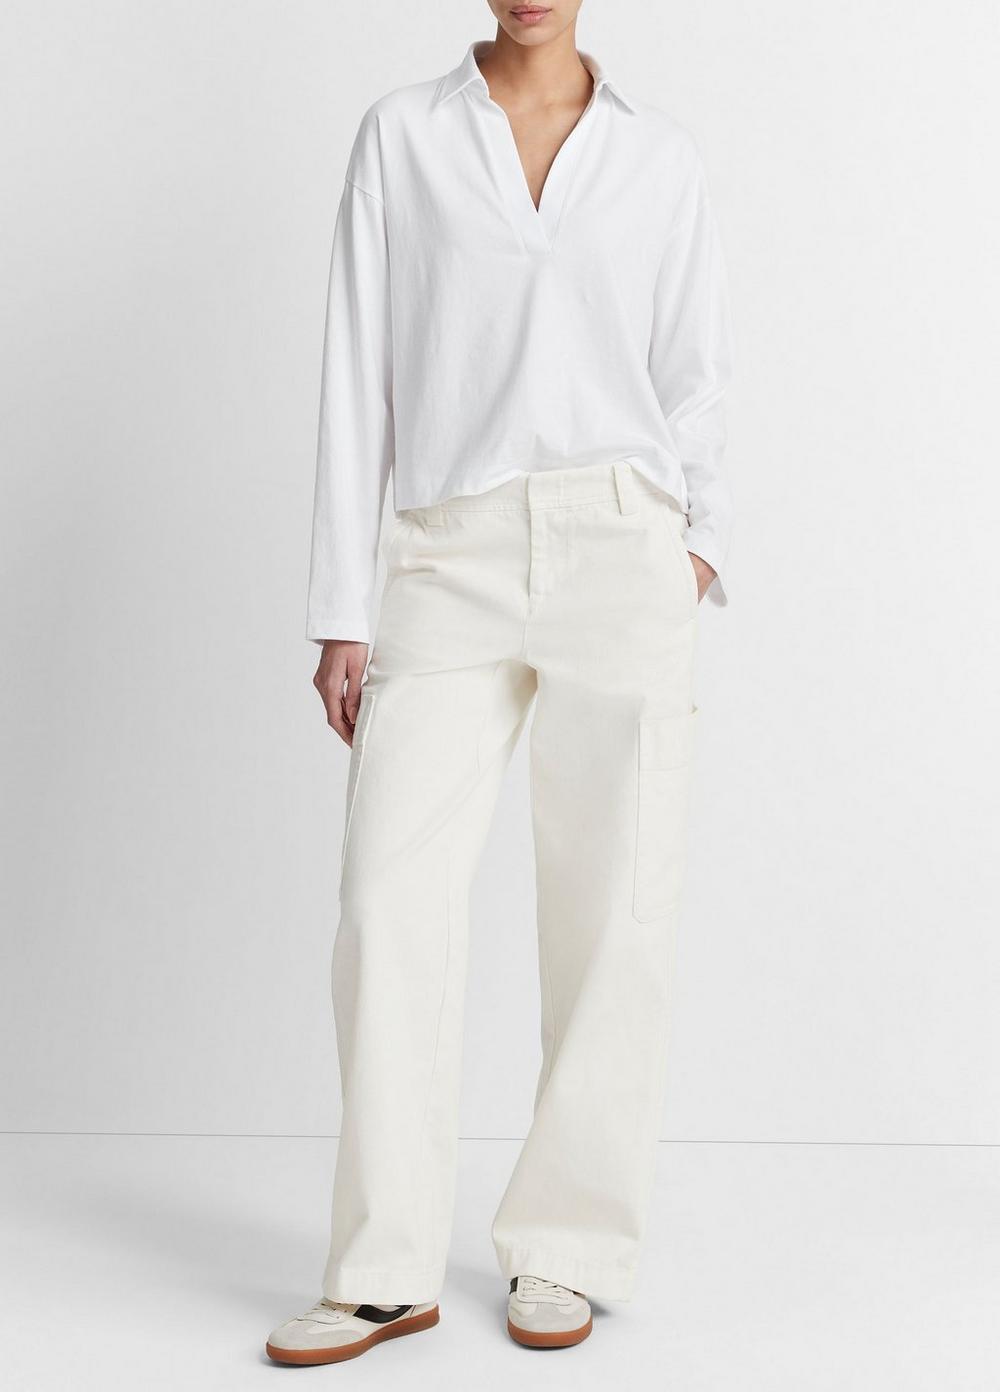 Easy Pima Cotton Long-Sleeve Polo Shirt, Optic White, Size XL Vince